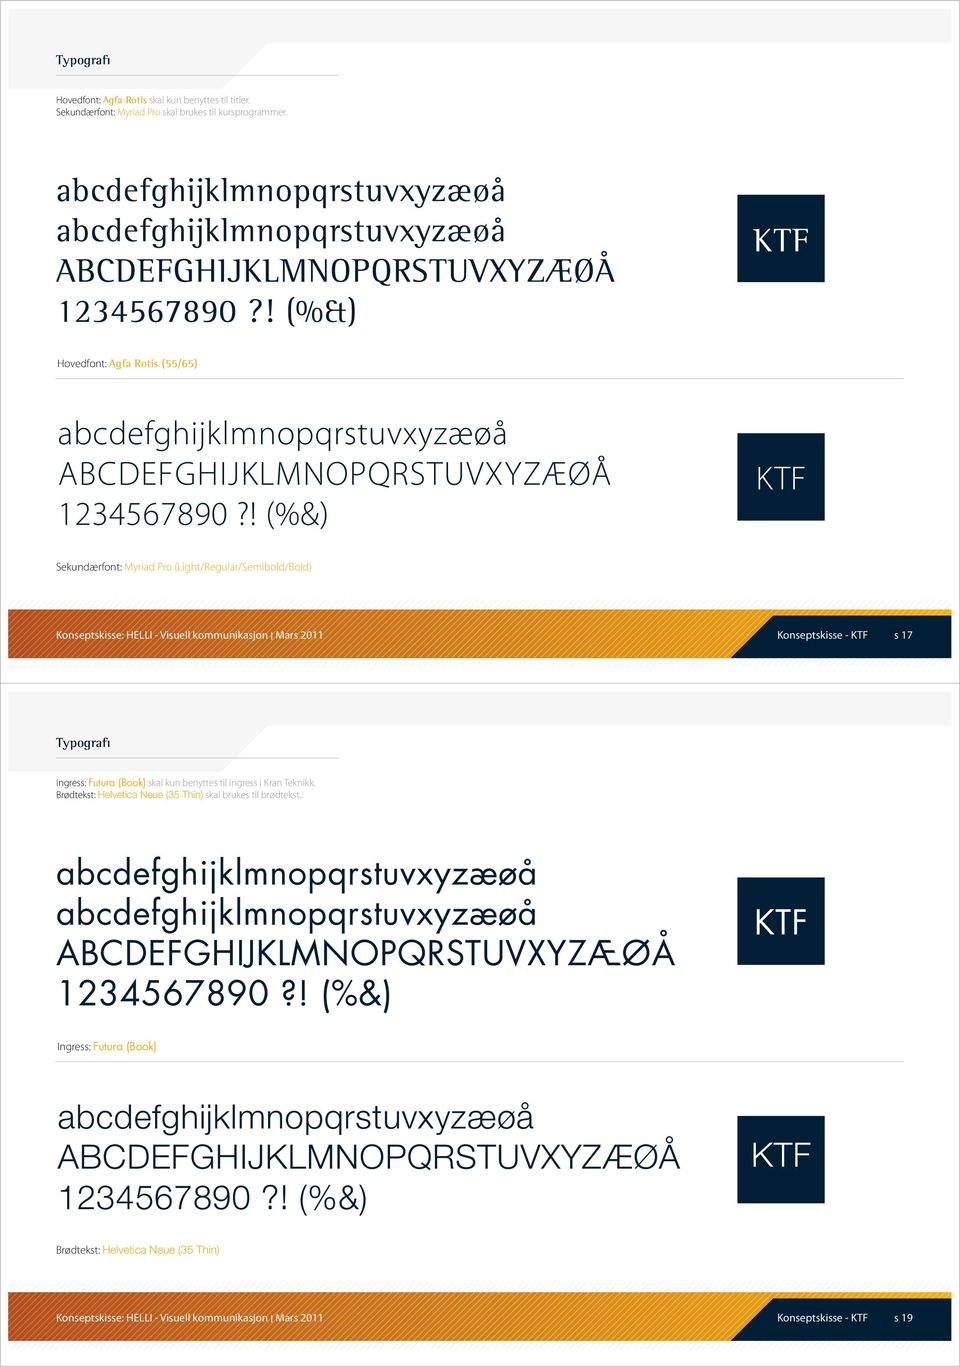 ! (%&) KTF Sekundærfont: Myriad Pro (Light/Regular/Semibold/Bold) Konseptskisse - KTF s 17 Typografi Ingress: Futura (Book) skal kun benyttes til ingress i Kran